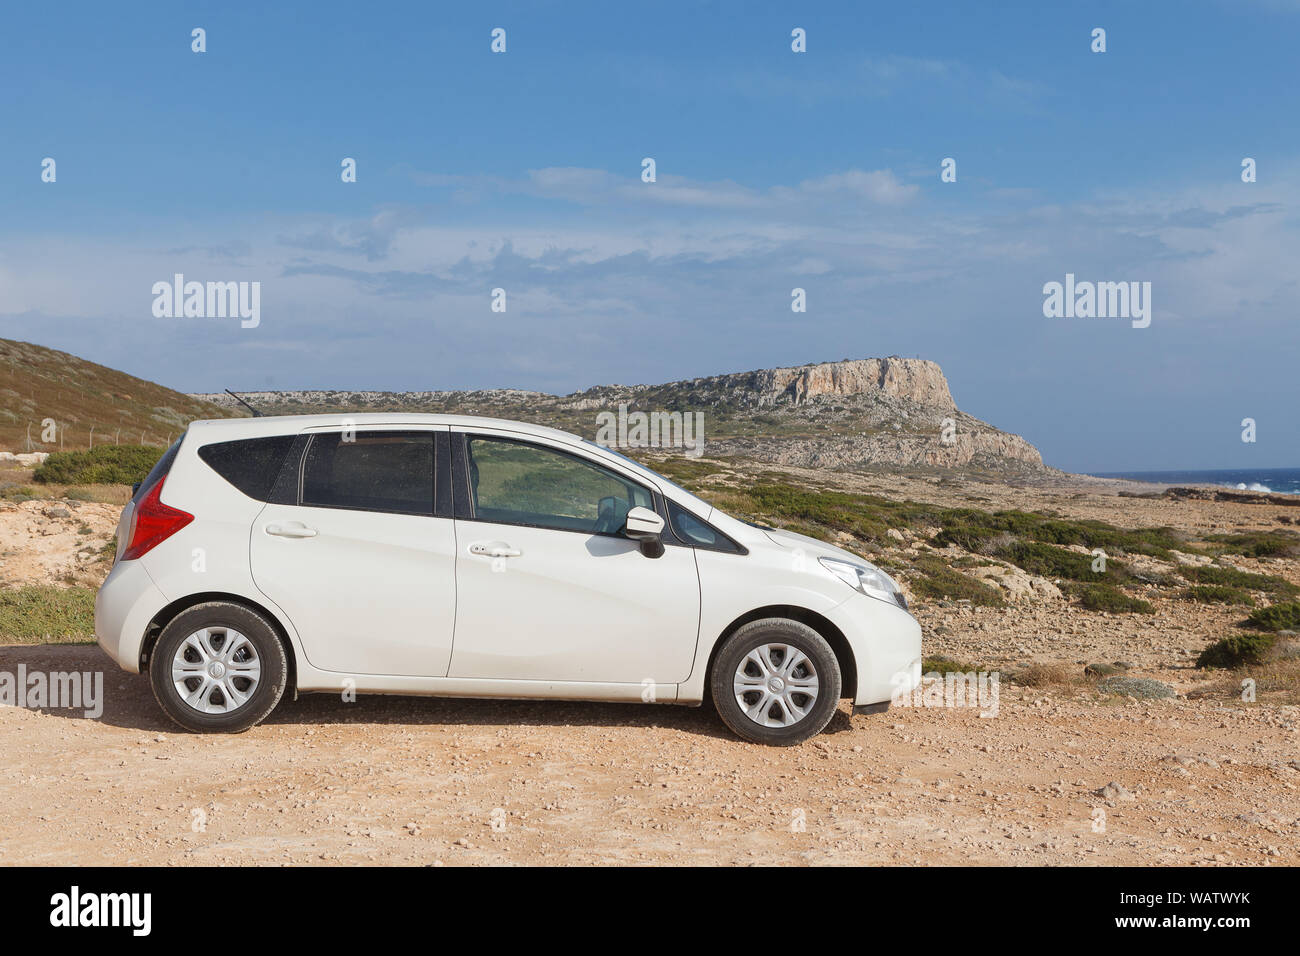 råb op Rød dato talent White economy car explores Cyprus offroad destinations Stock Photo - Alamy